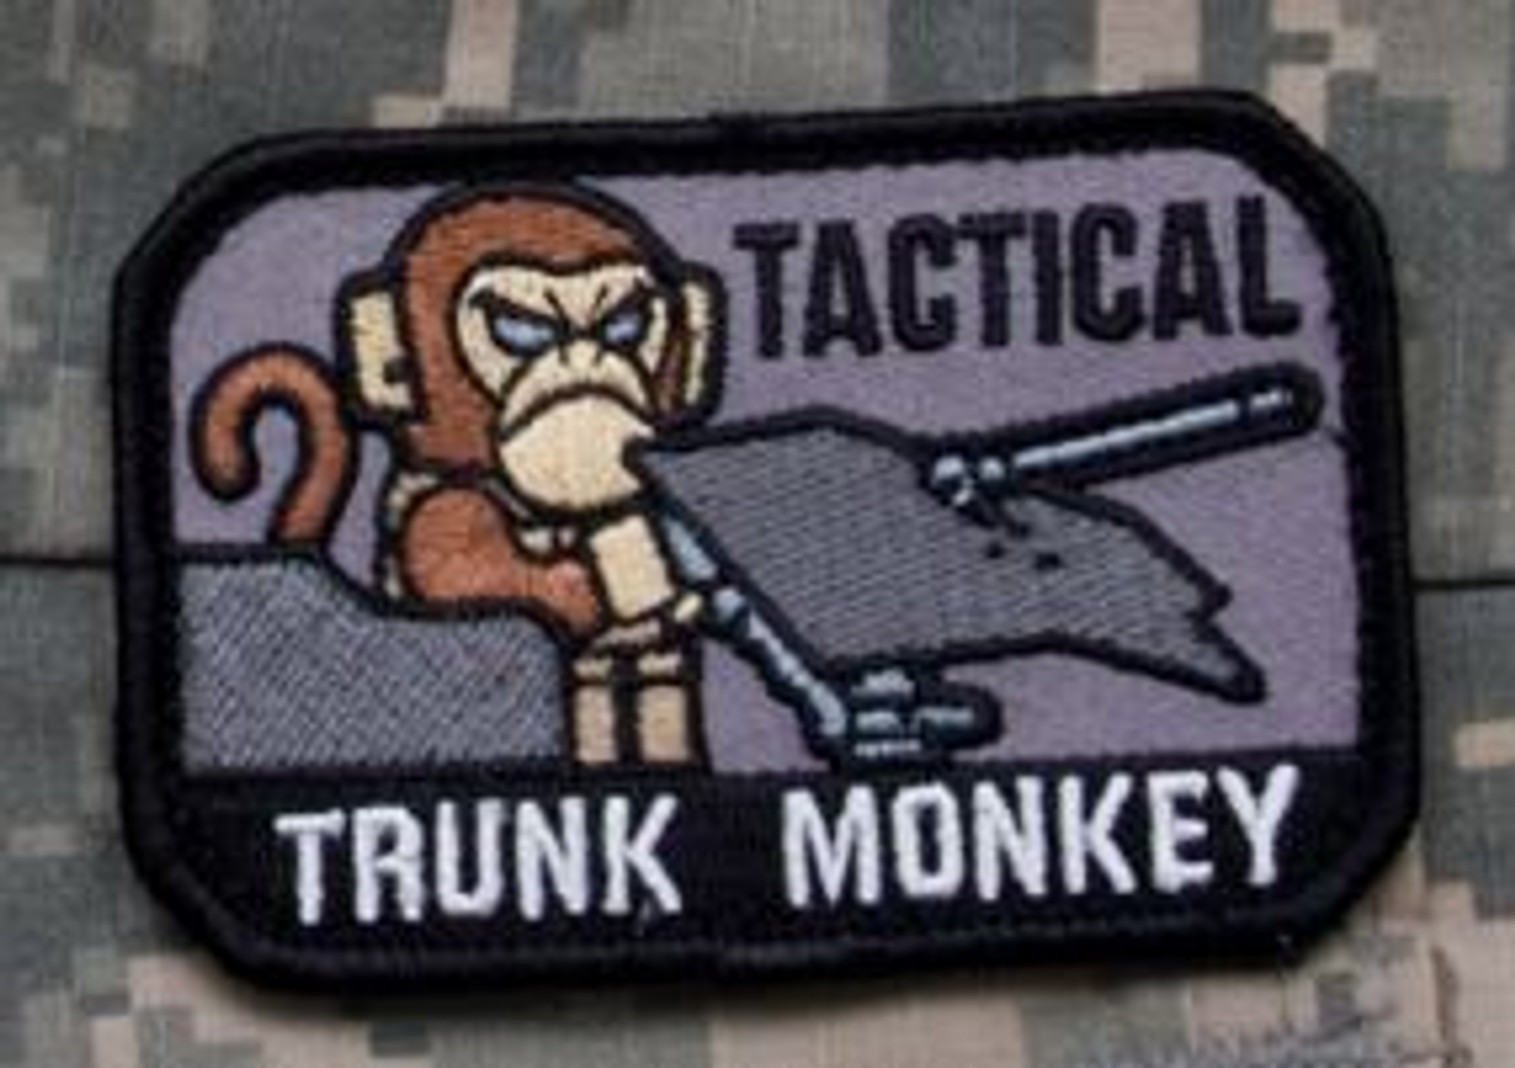 Mil-Spec Monkey Patch - Tactical Trunk Monkey